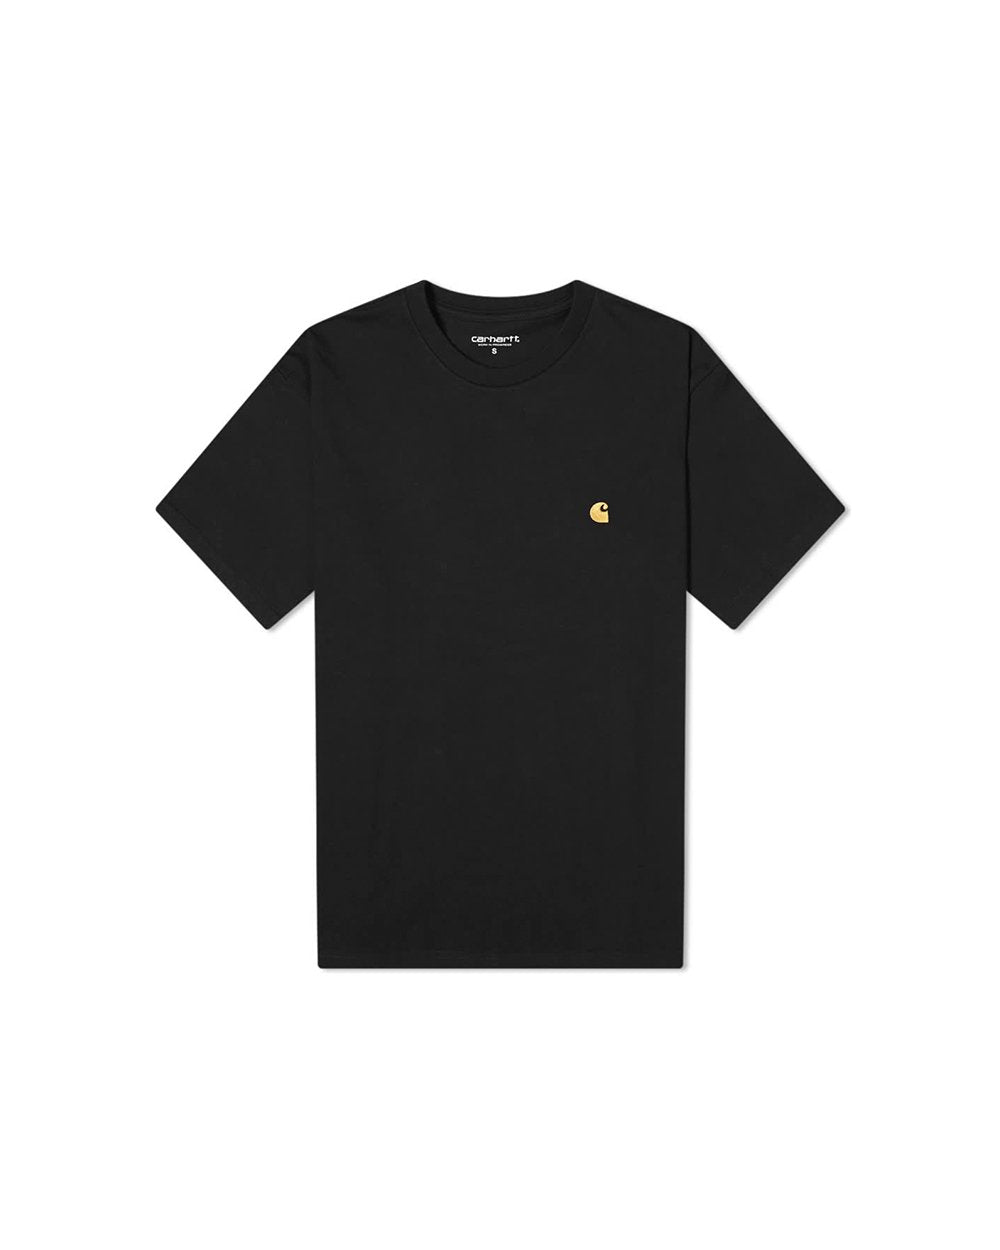 Chase T-Shirt - Black / Gold